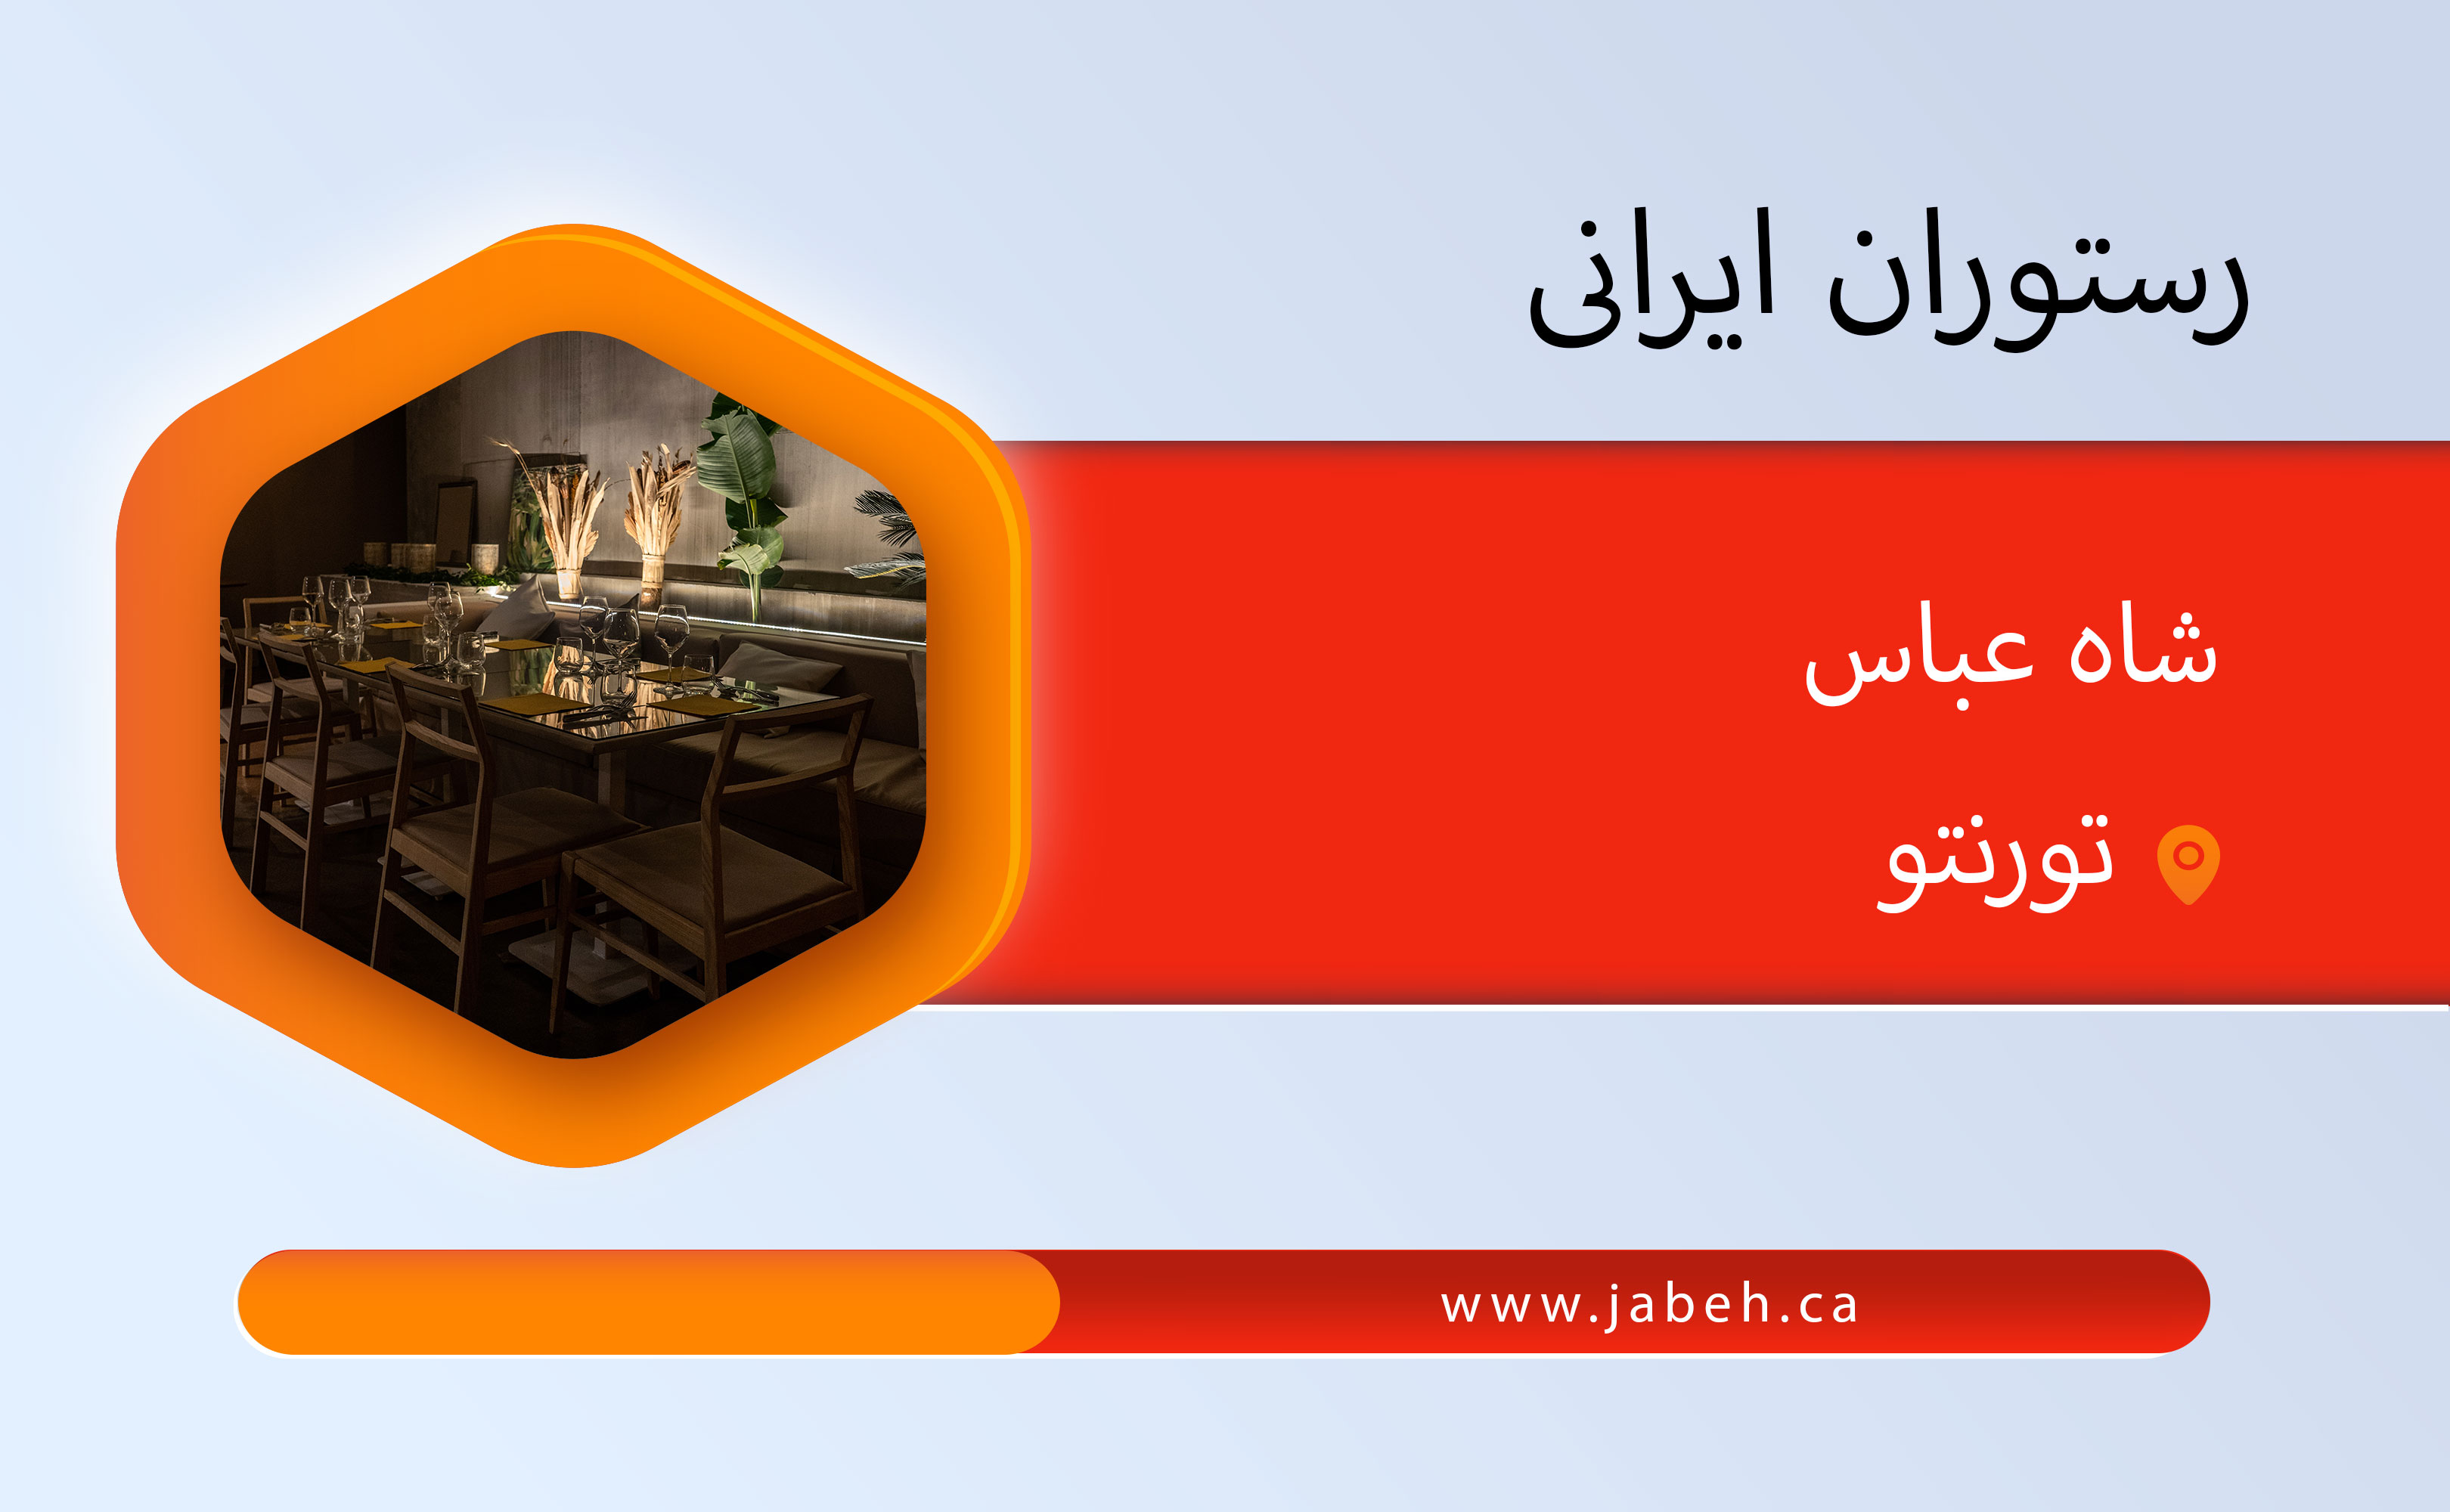 Shah Abbas Iranian Restaurant in Toronto